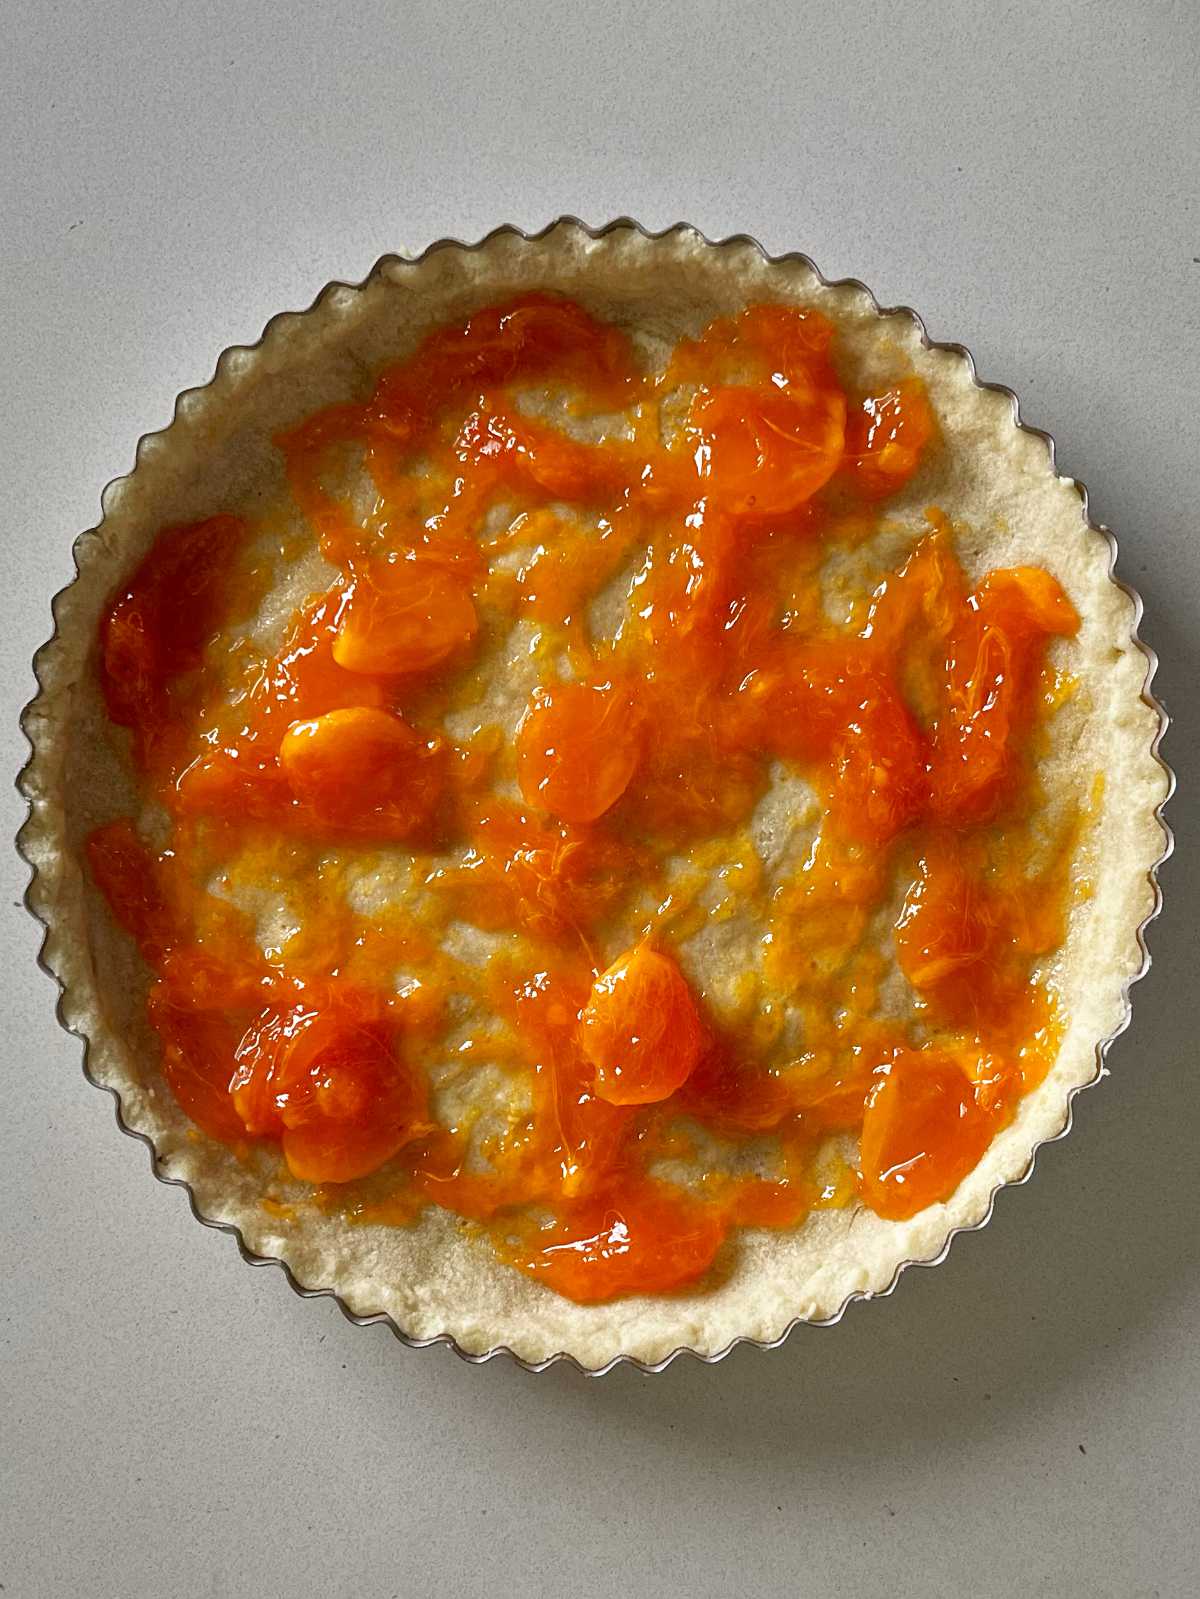 Orange puree spread around a blind baked tart shell.